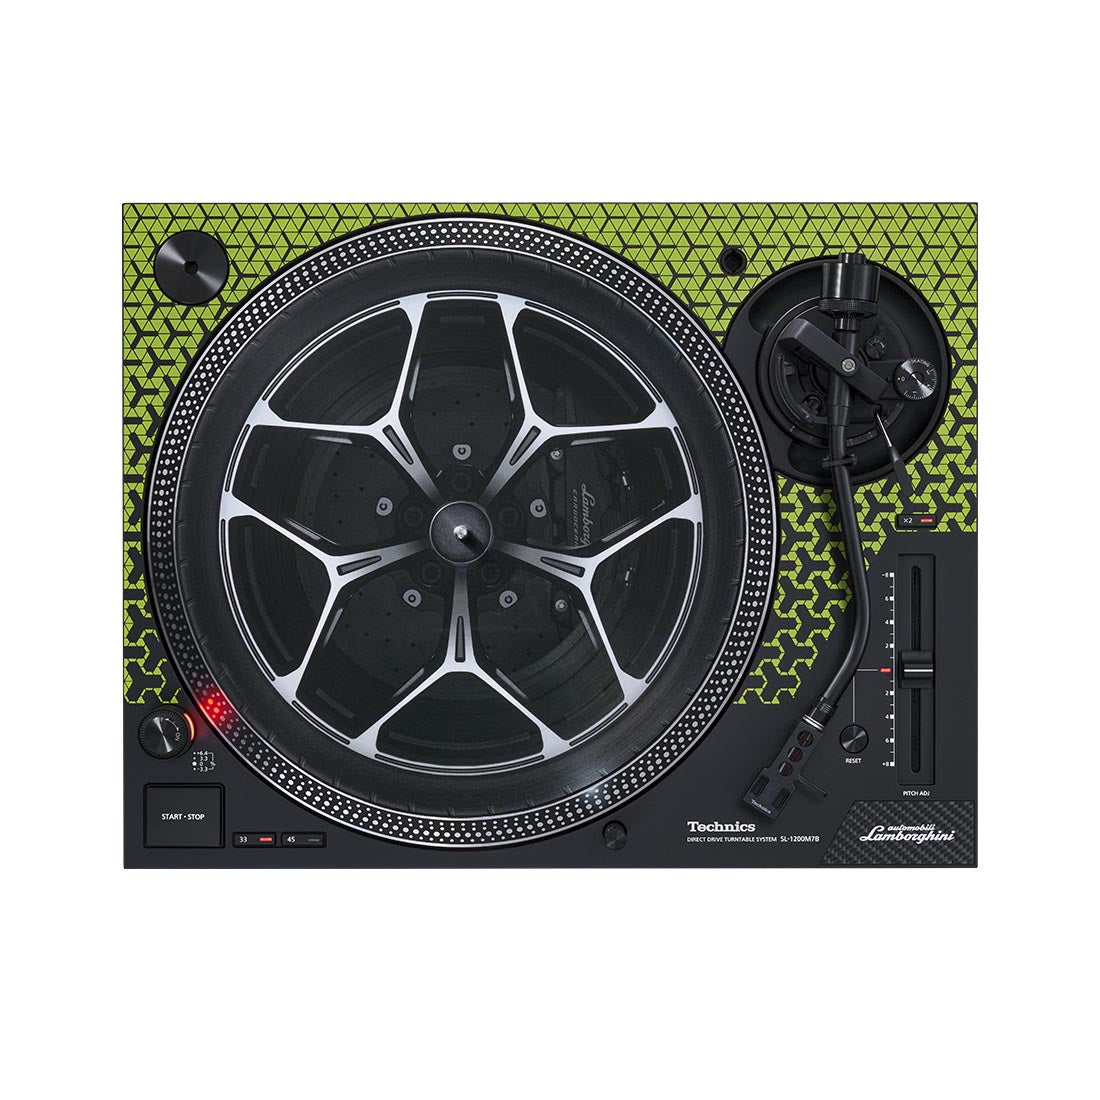 Technics SL-1200M7BG Green Lamborghini Collaboration Turntable with engine sounds picture vinyl